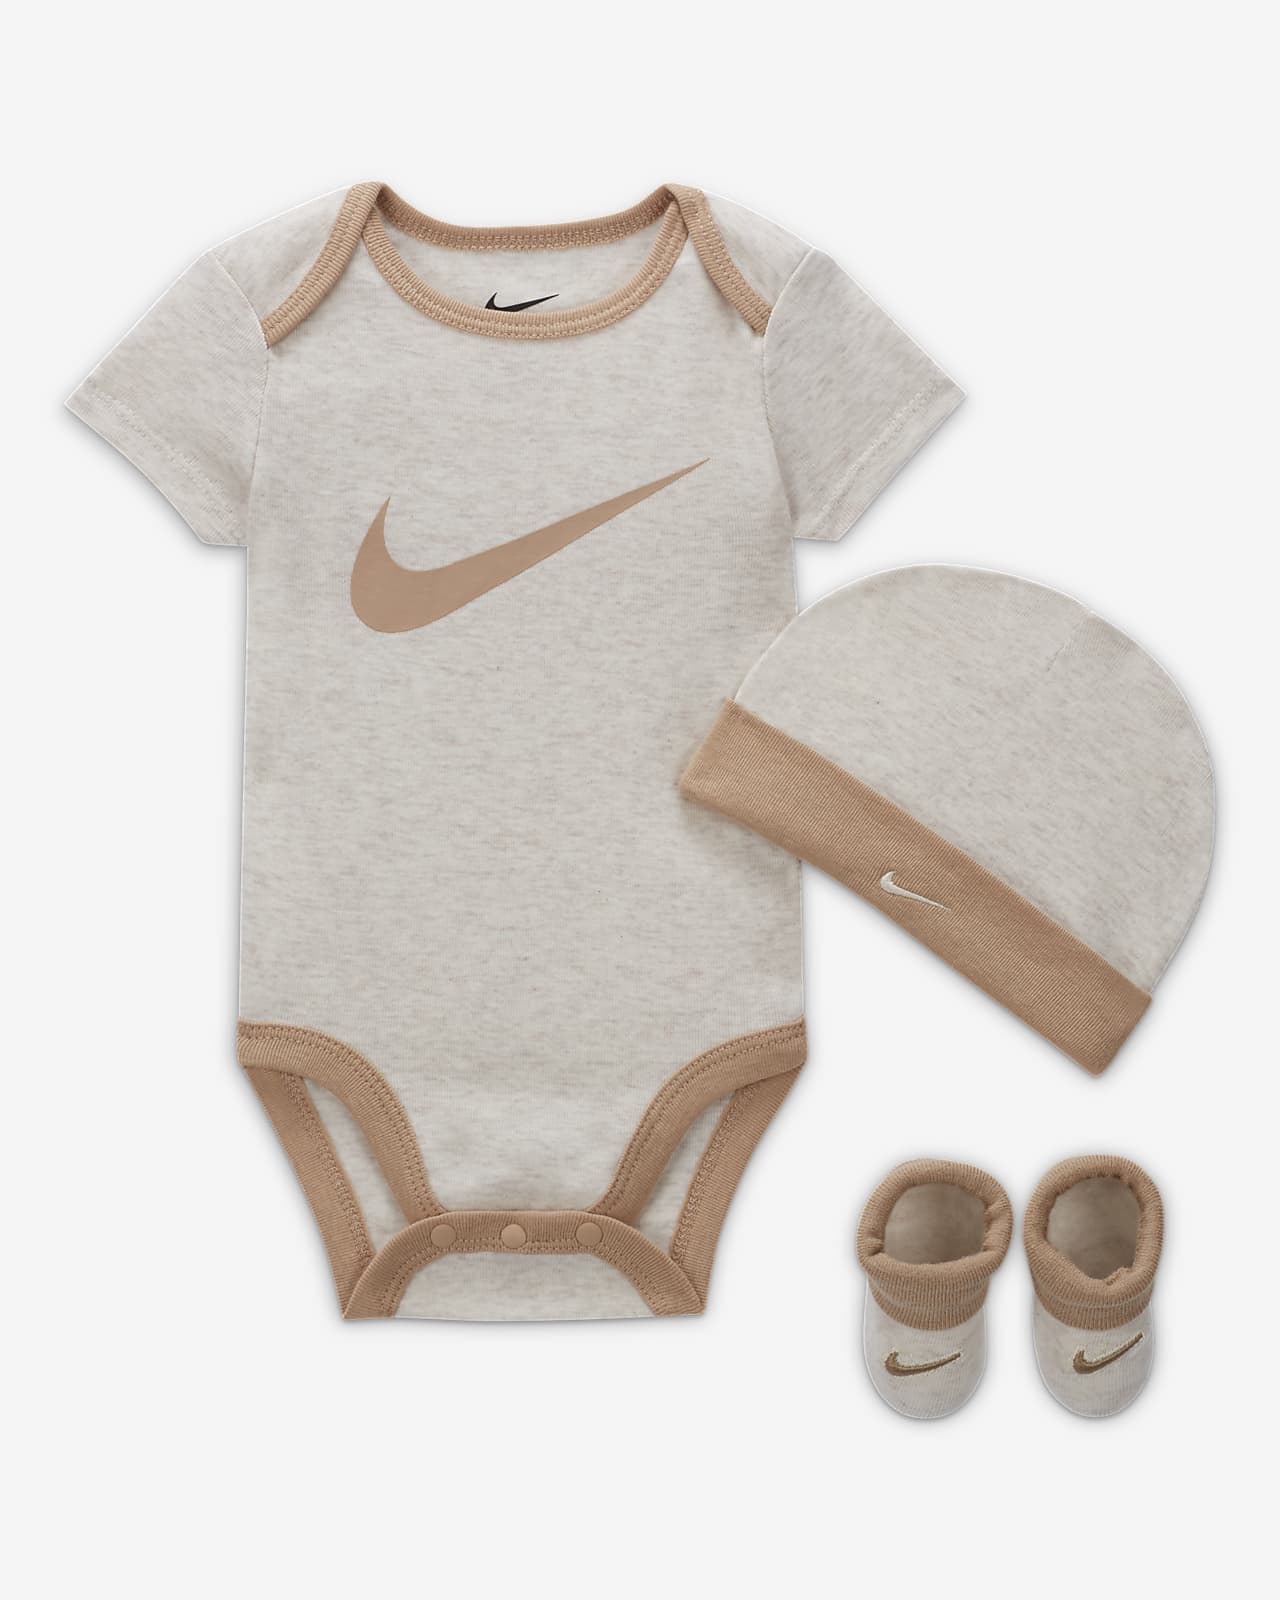 Conjunto de body, gorro y calzado para bebés (0 a 6 meses) Nike